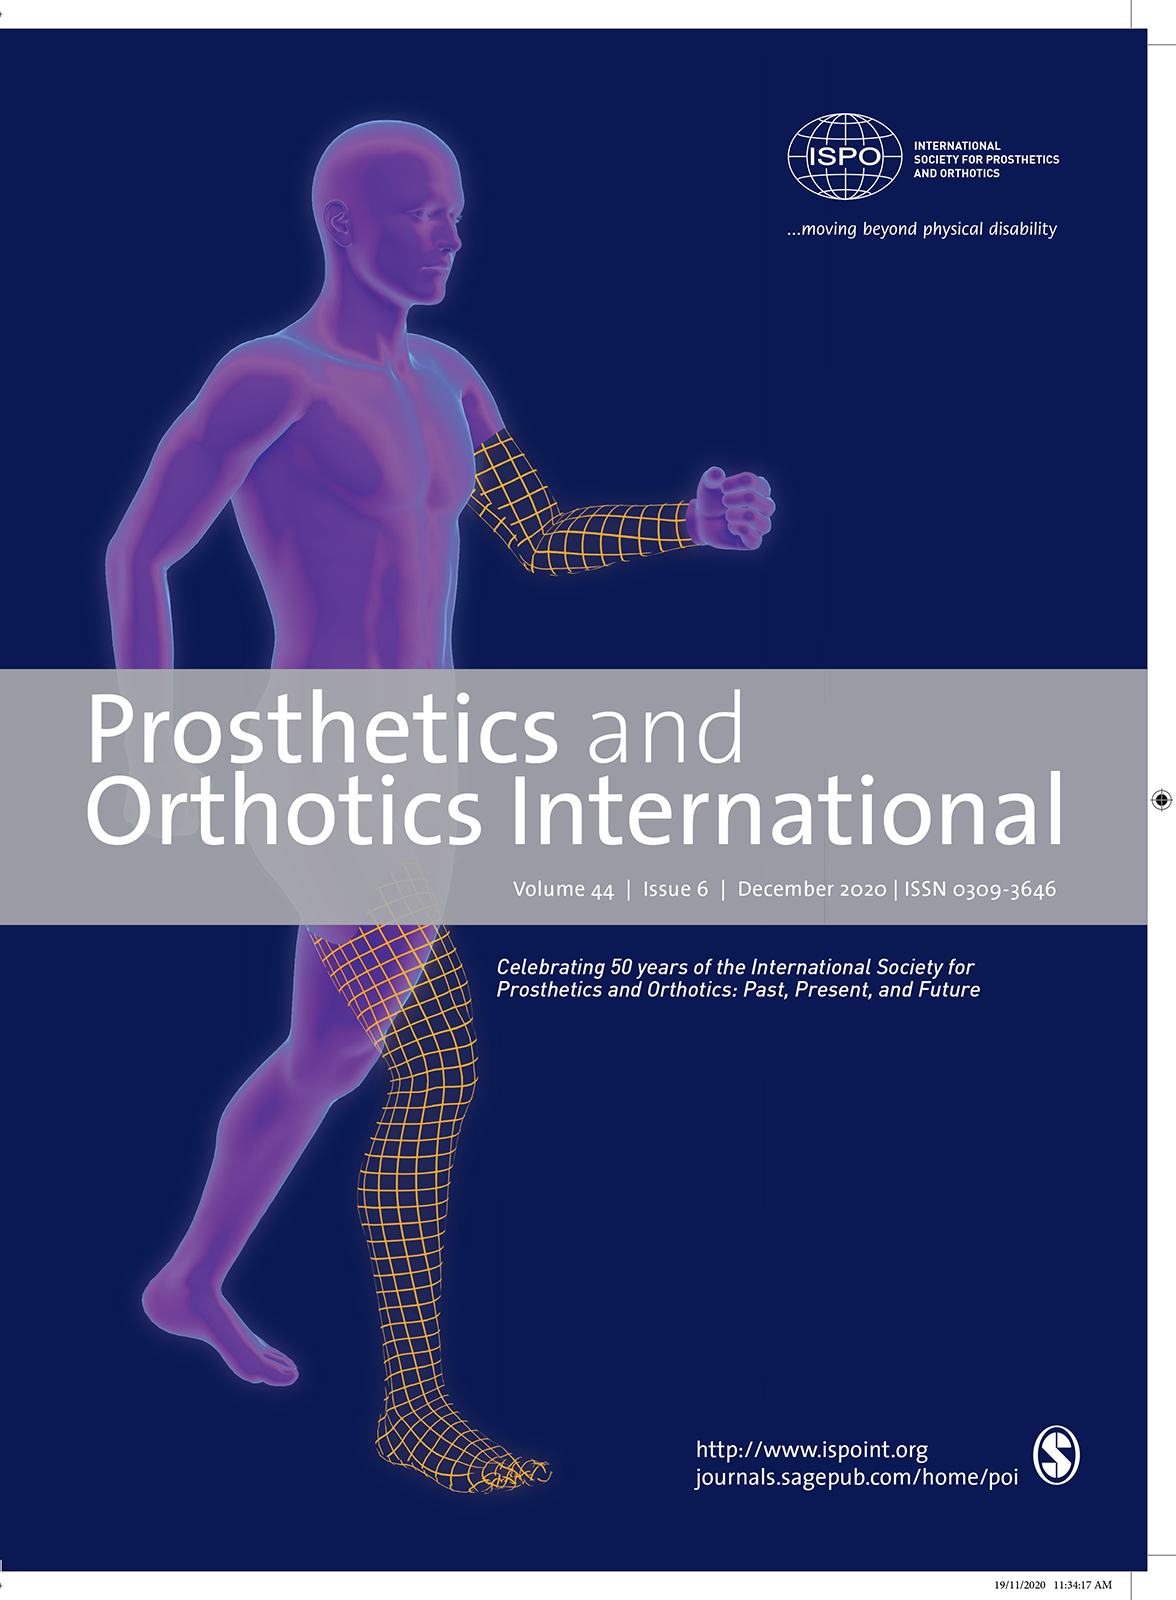 Prosthetics and Orthotics International Journal